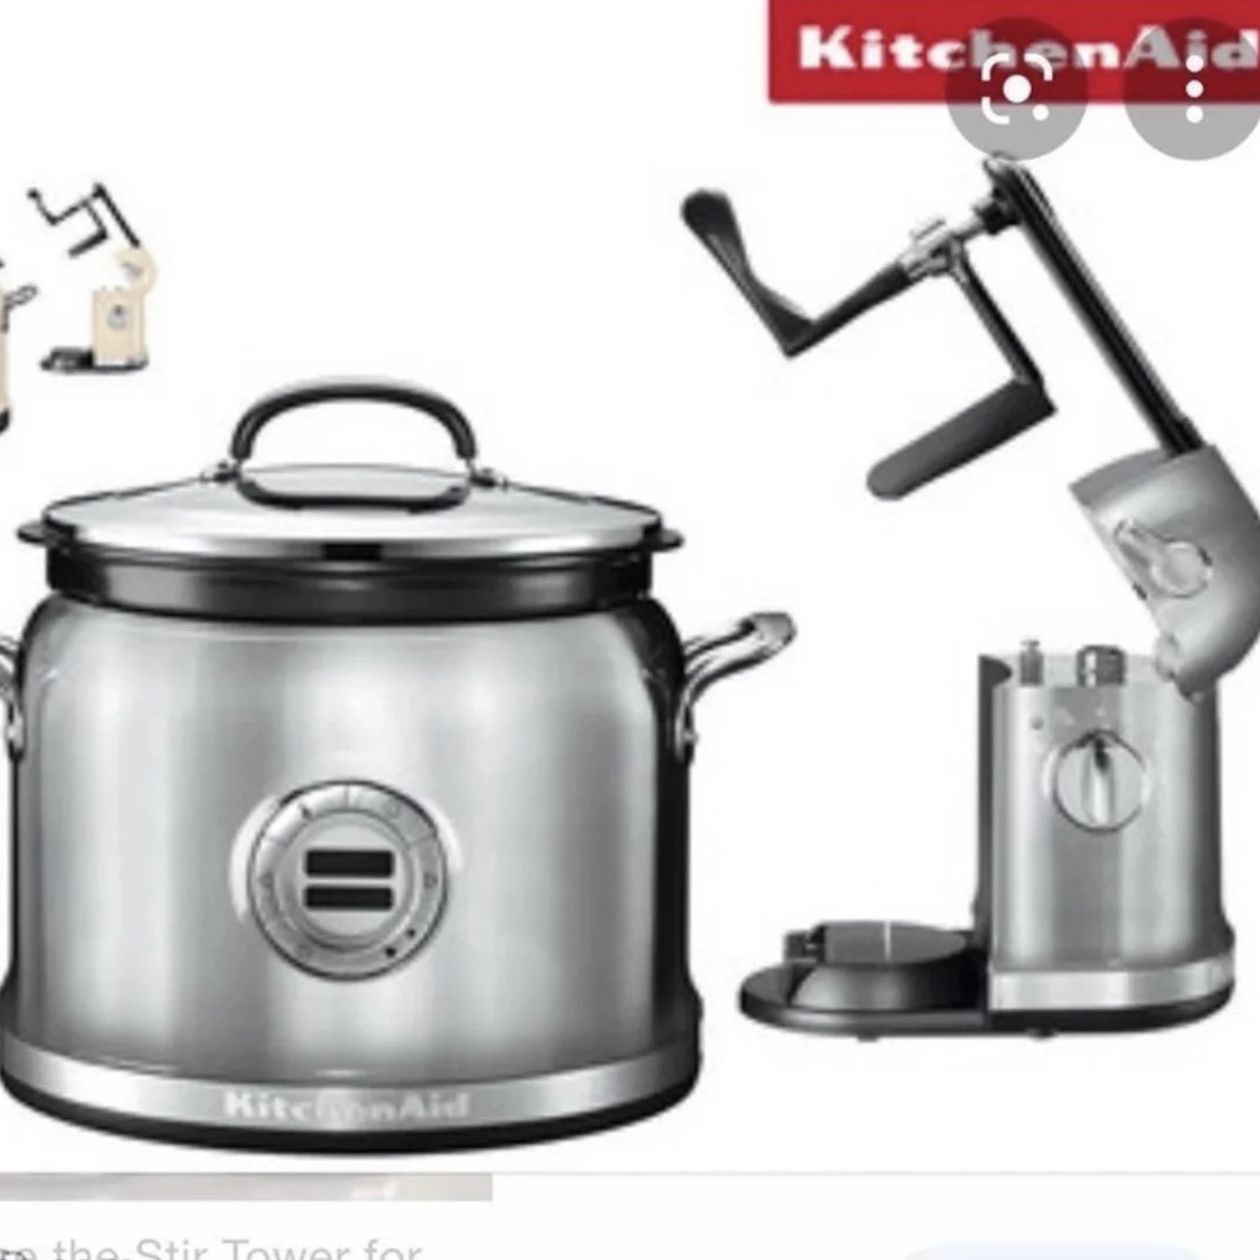 KitchenAid Multi Cooker with Stir Tower on Vimeo